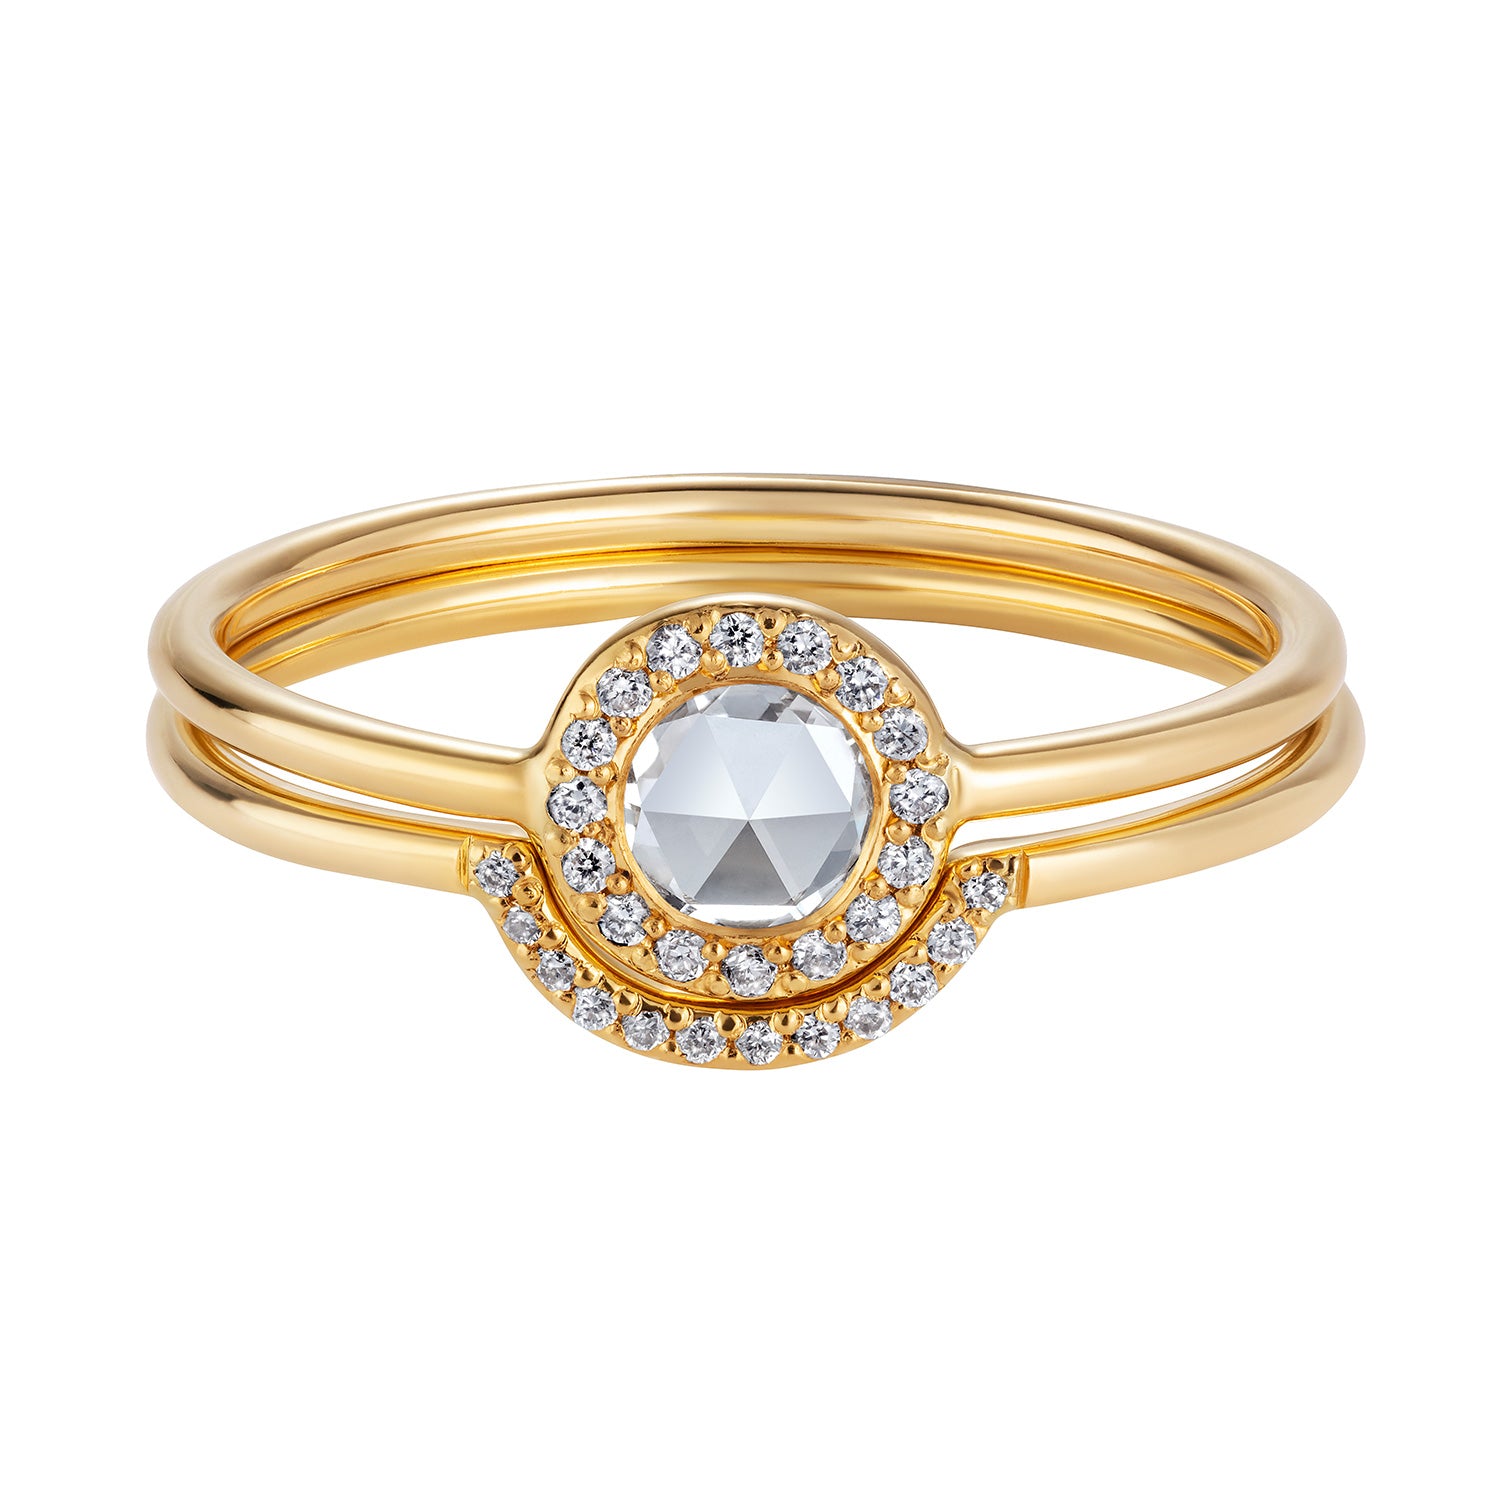 Sweet Pea 18ct yellow gold diamond set horseshoe wedding stacking ring stacked with a rose cut diamond halo engagement ring.